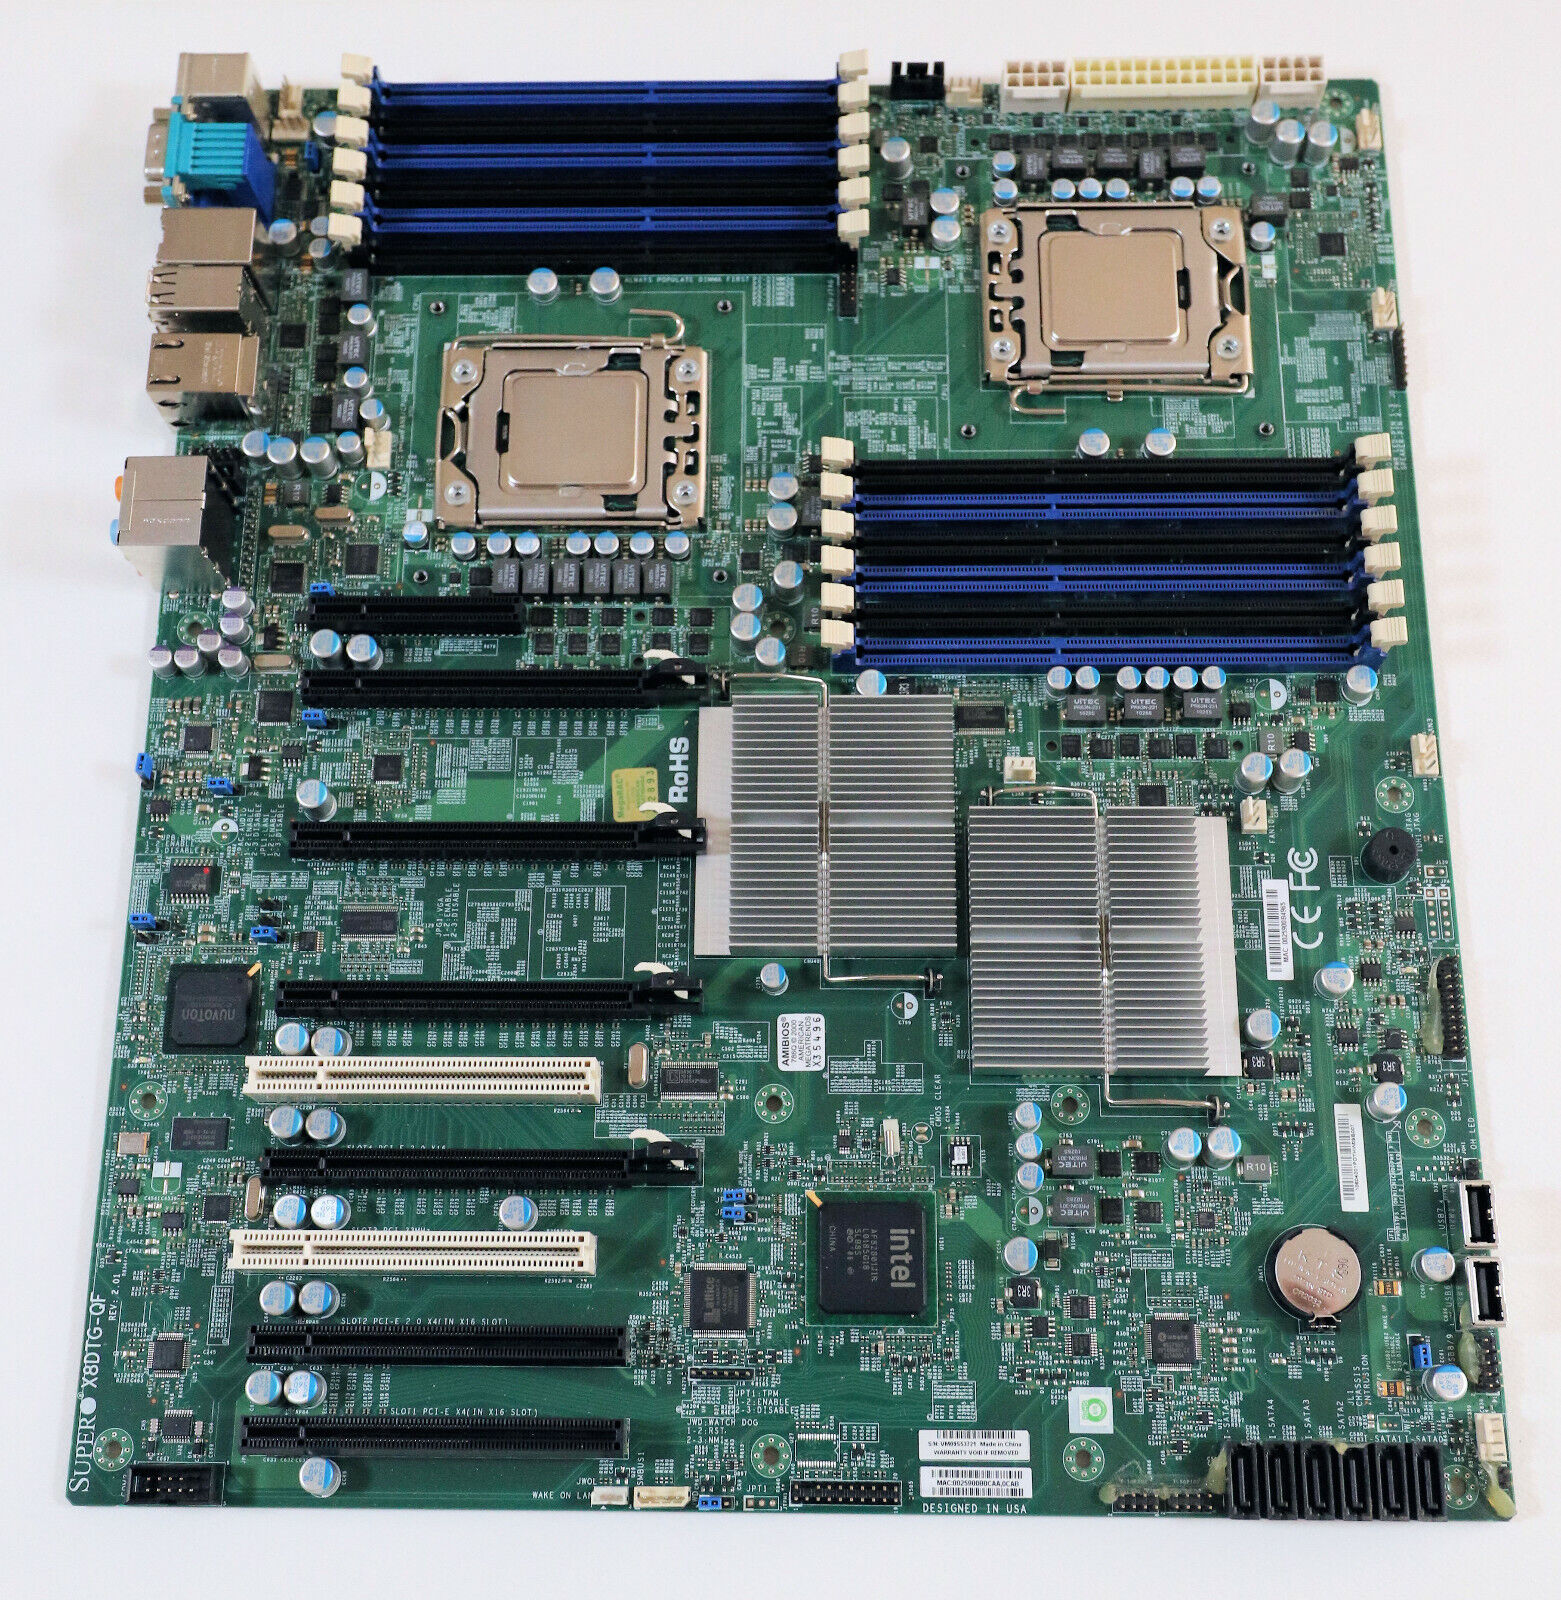 SuperMicro X8DTG-QF REV: 2.01 Motherboard W/ 2x Intel X5670 